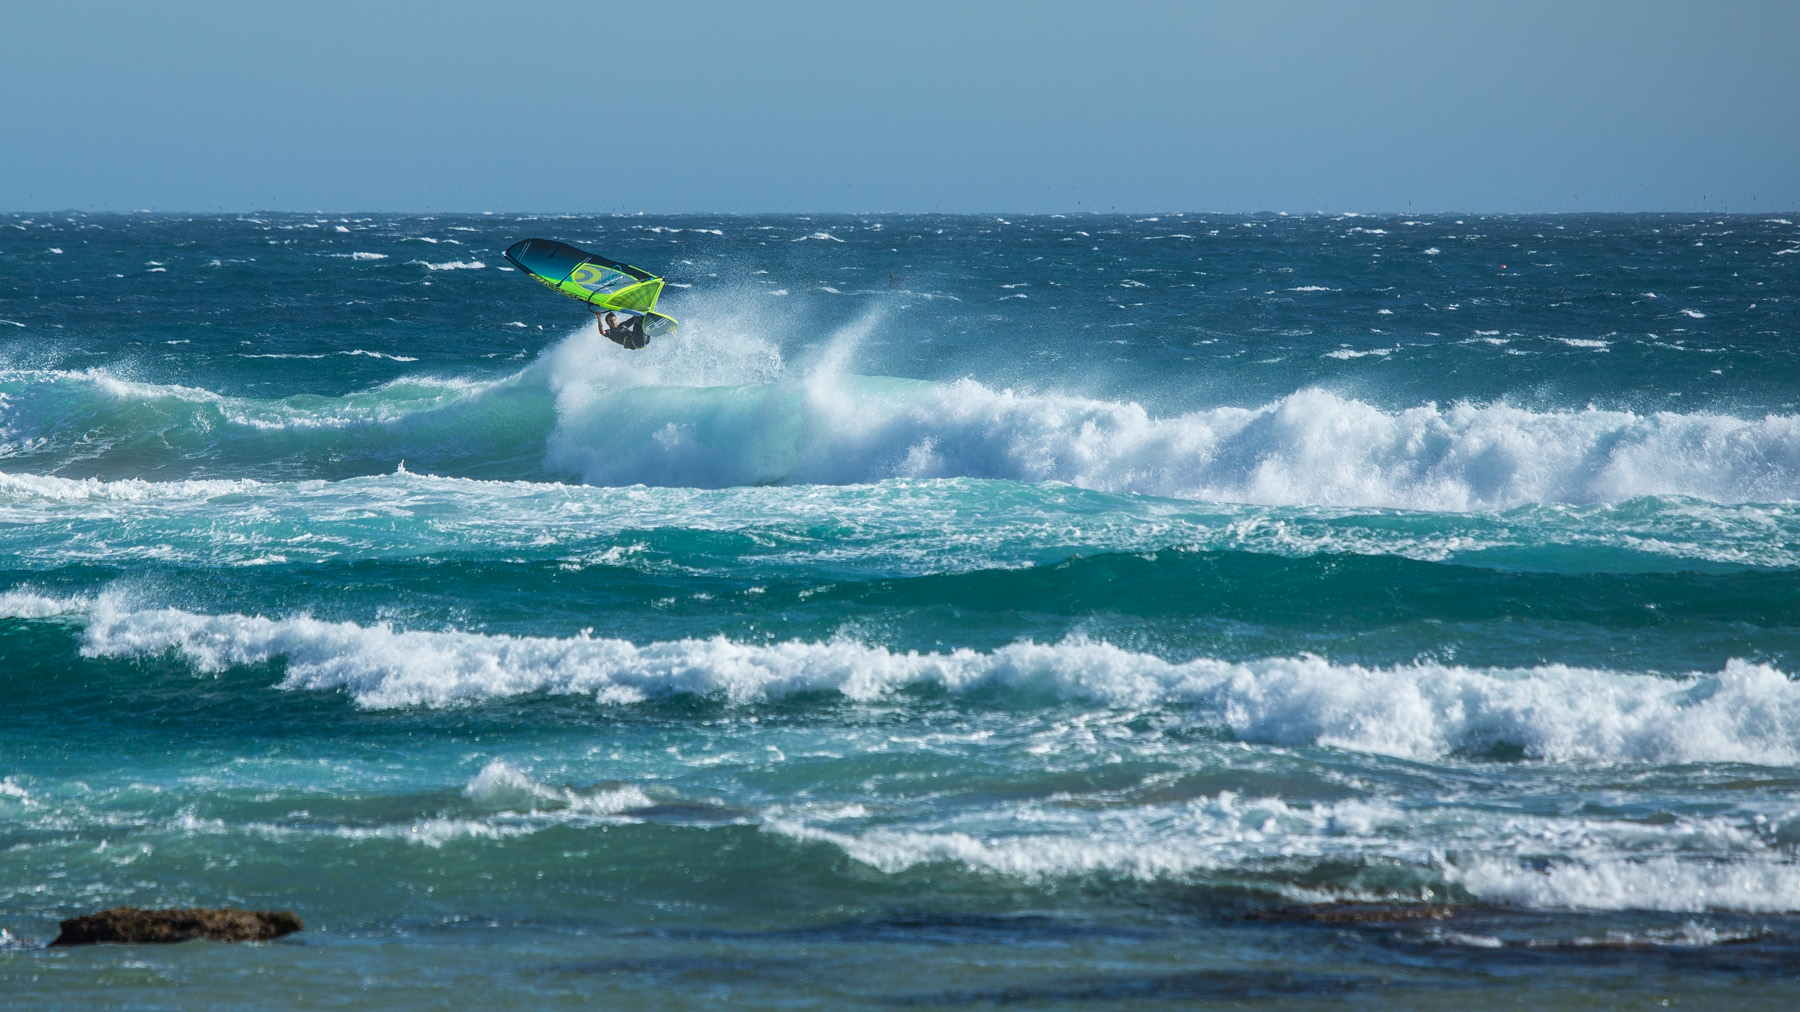 windsurfing wavesailing at gunnamatta mornington peninsula